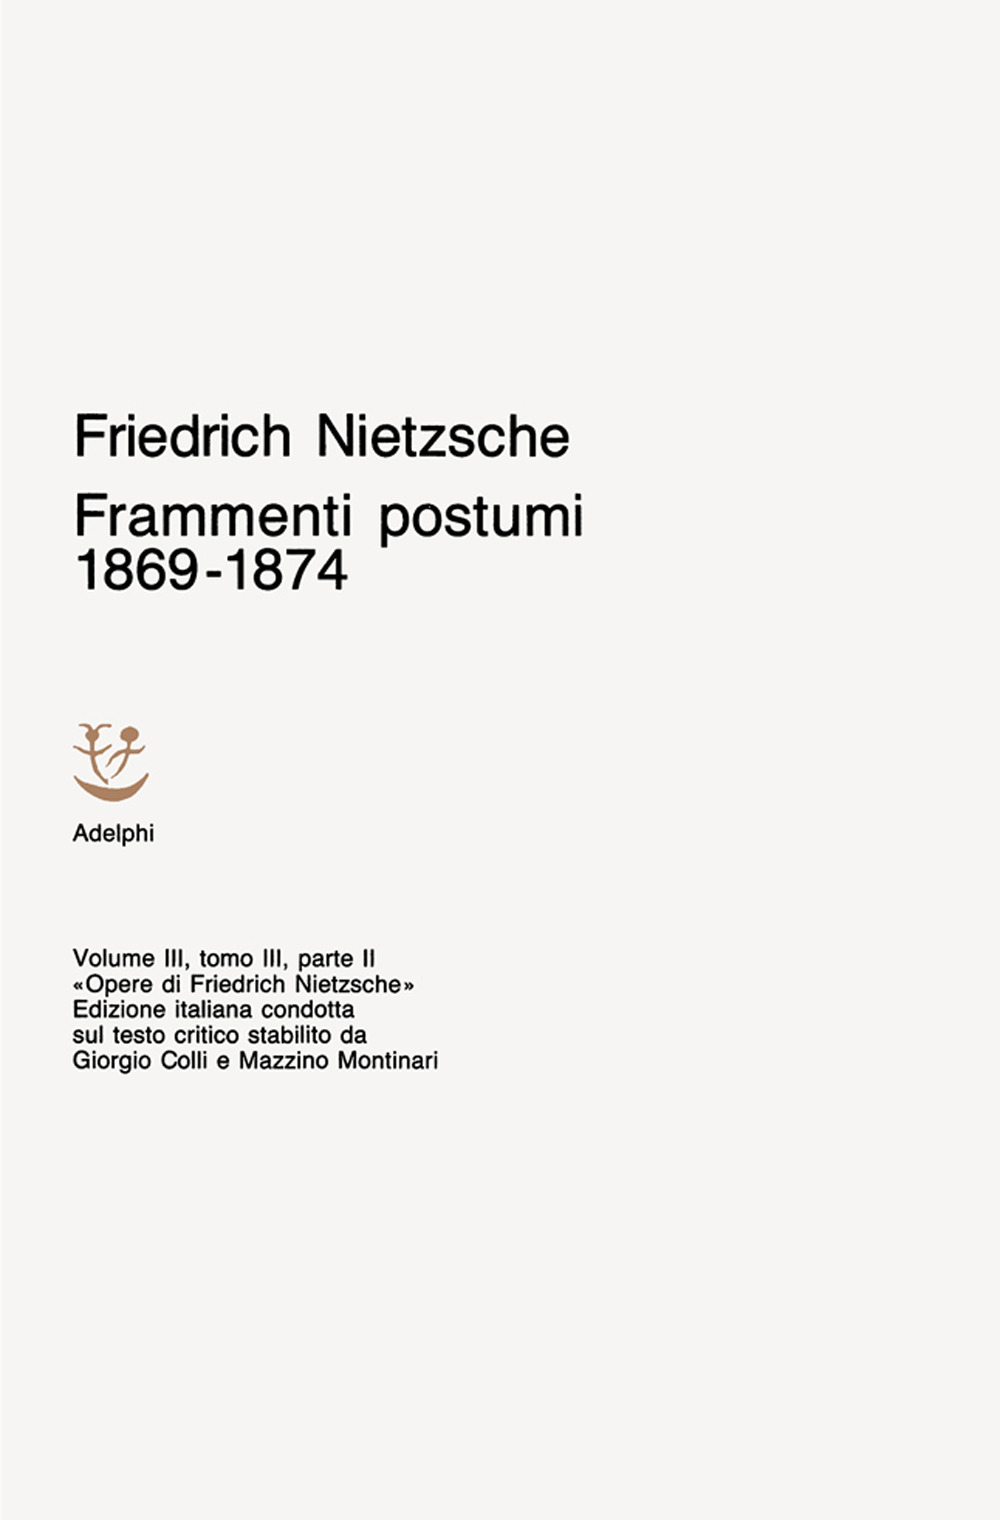 Opere complete. Vol. 3: Frammenti postumi 1869-1874